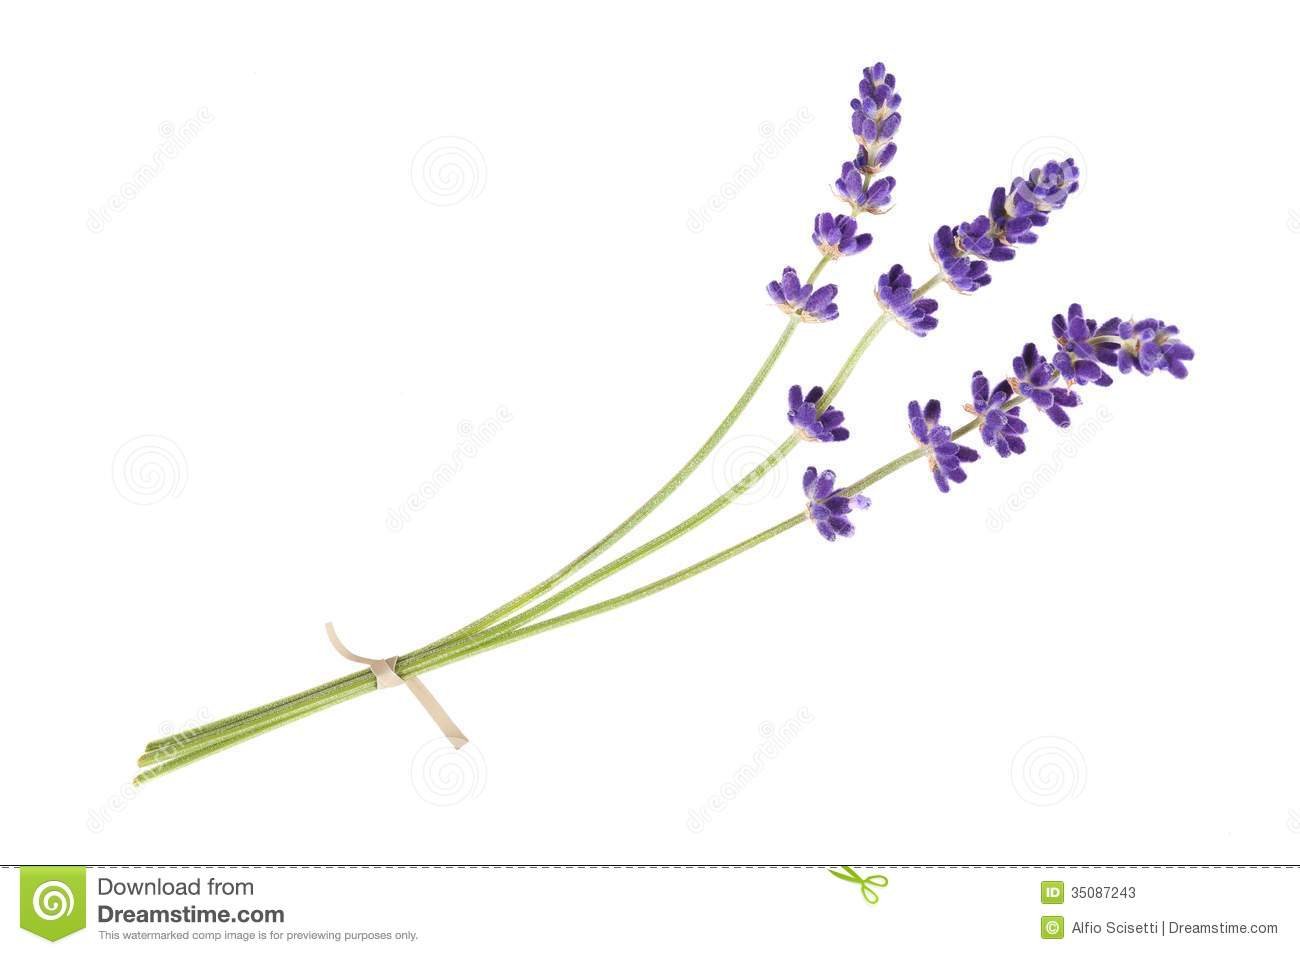 Lavender clipart lavender herb, Lavender lavender herb